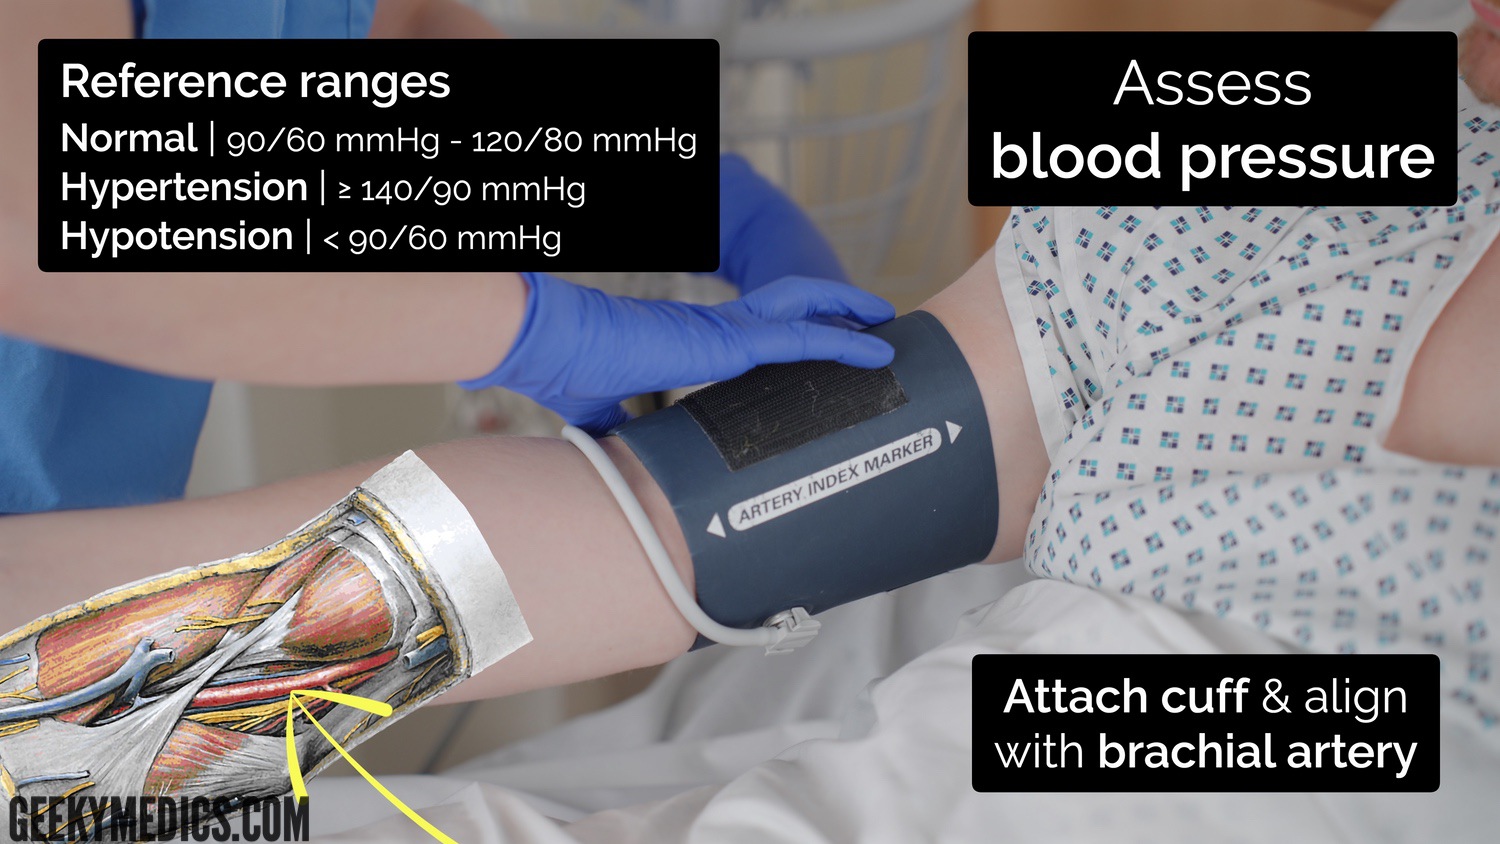 Measuring vital signs - assess blood pressure